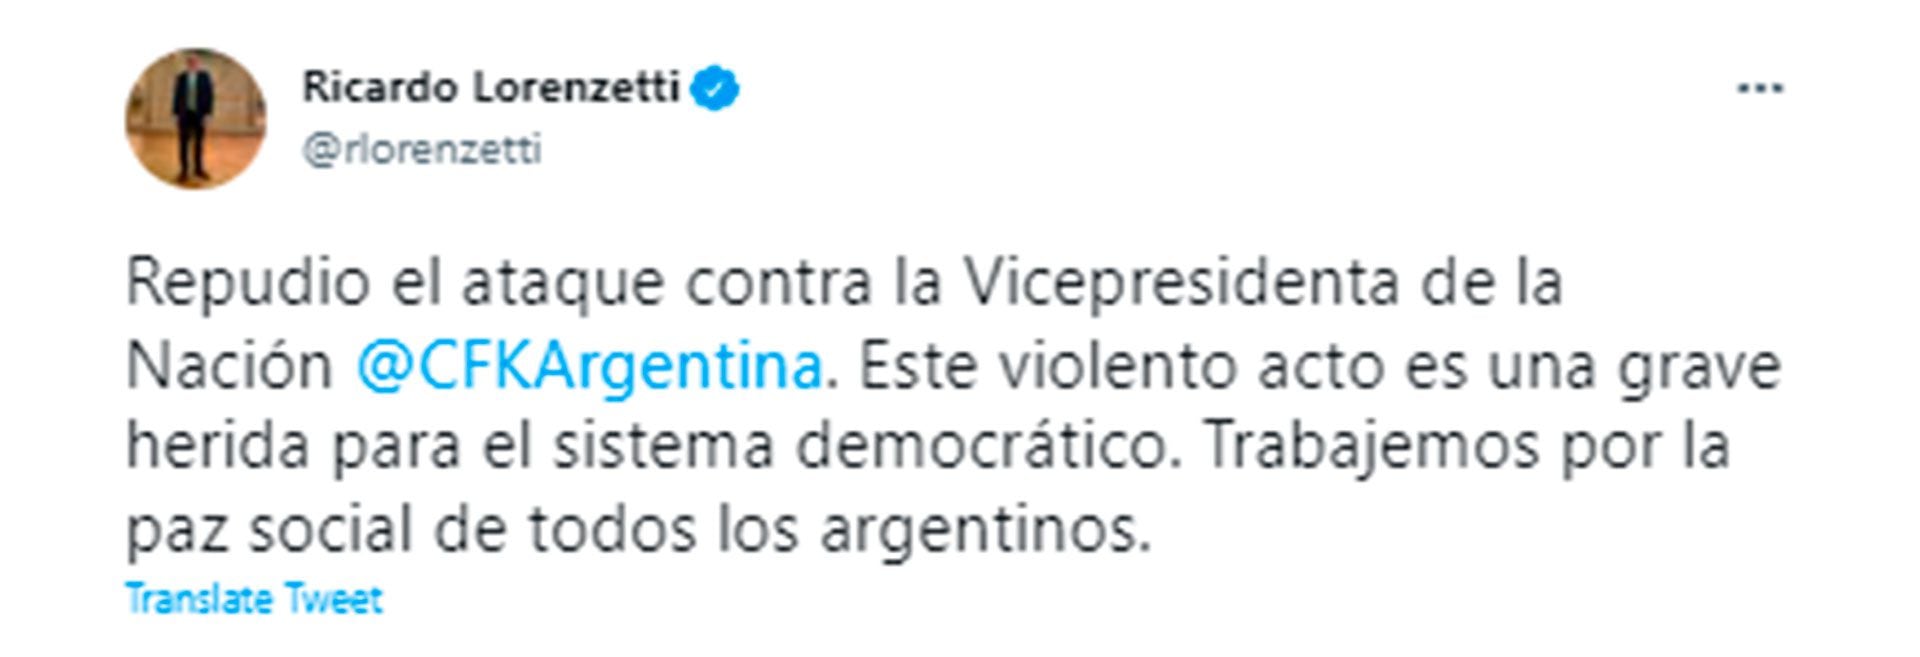 Tuit del juez Ricardo Lorenzetti en repudio al ataque que sufrió la vicepresidenta Cristina Kirchner. 